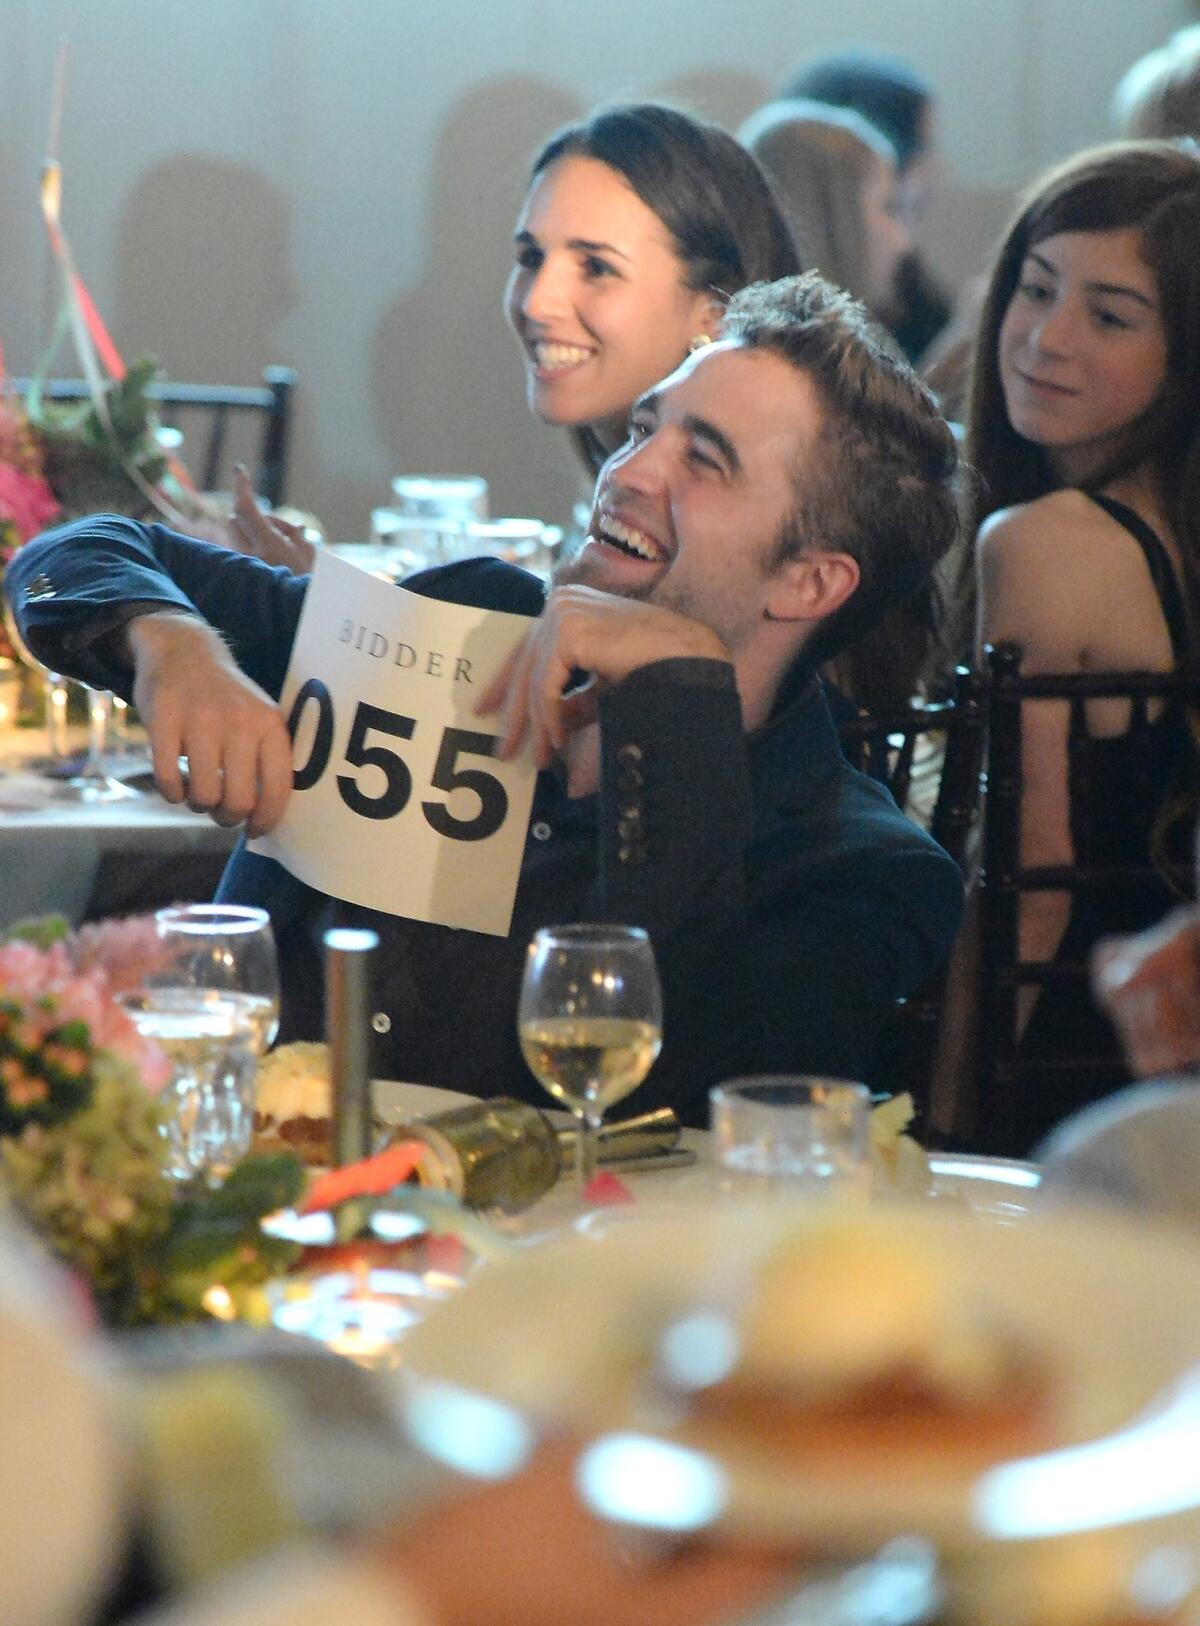 Robert Pattinson bids during the 6th Annual GO GO Gala at Bel-Air Bay Club on Thursday.